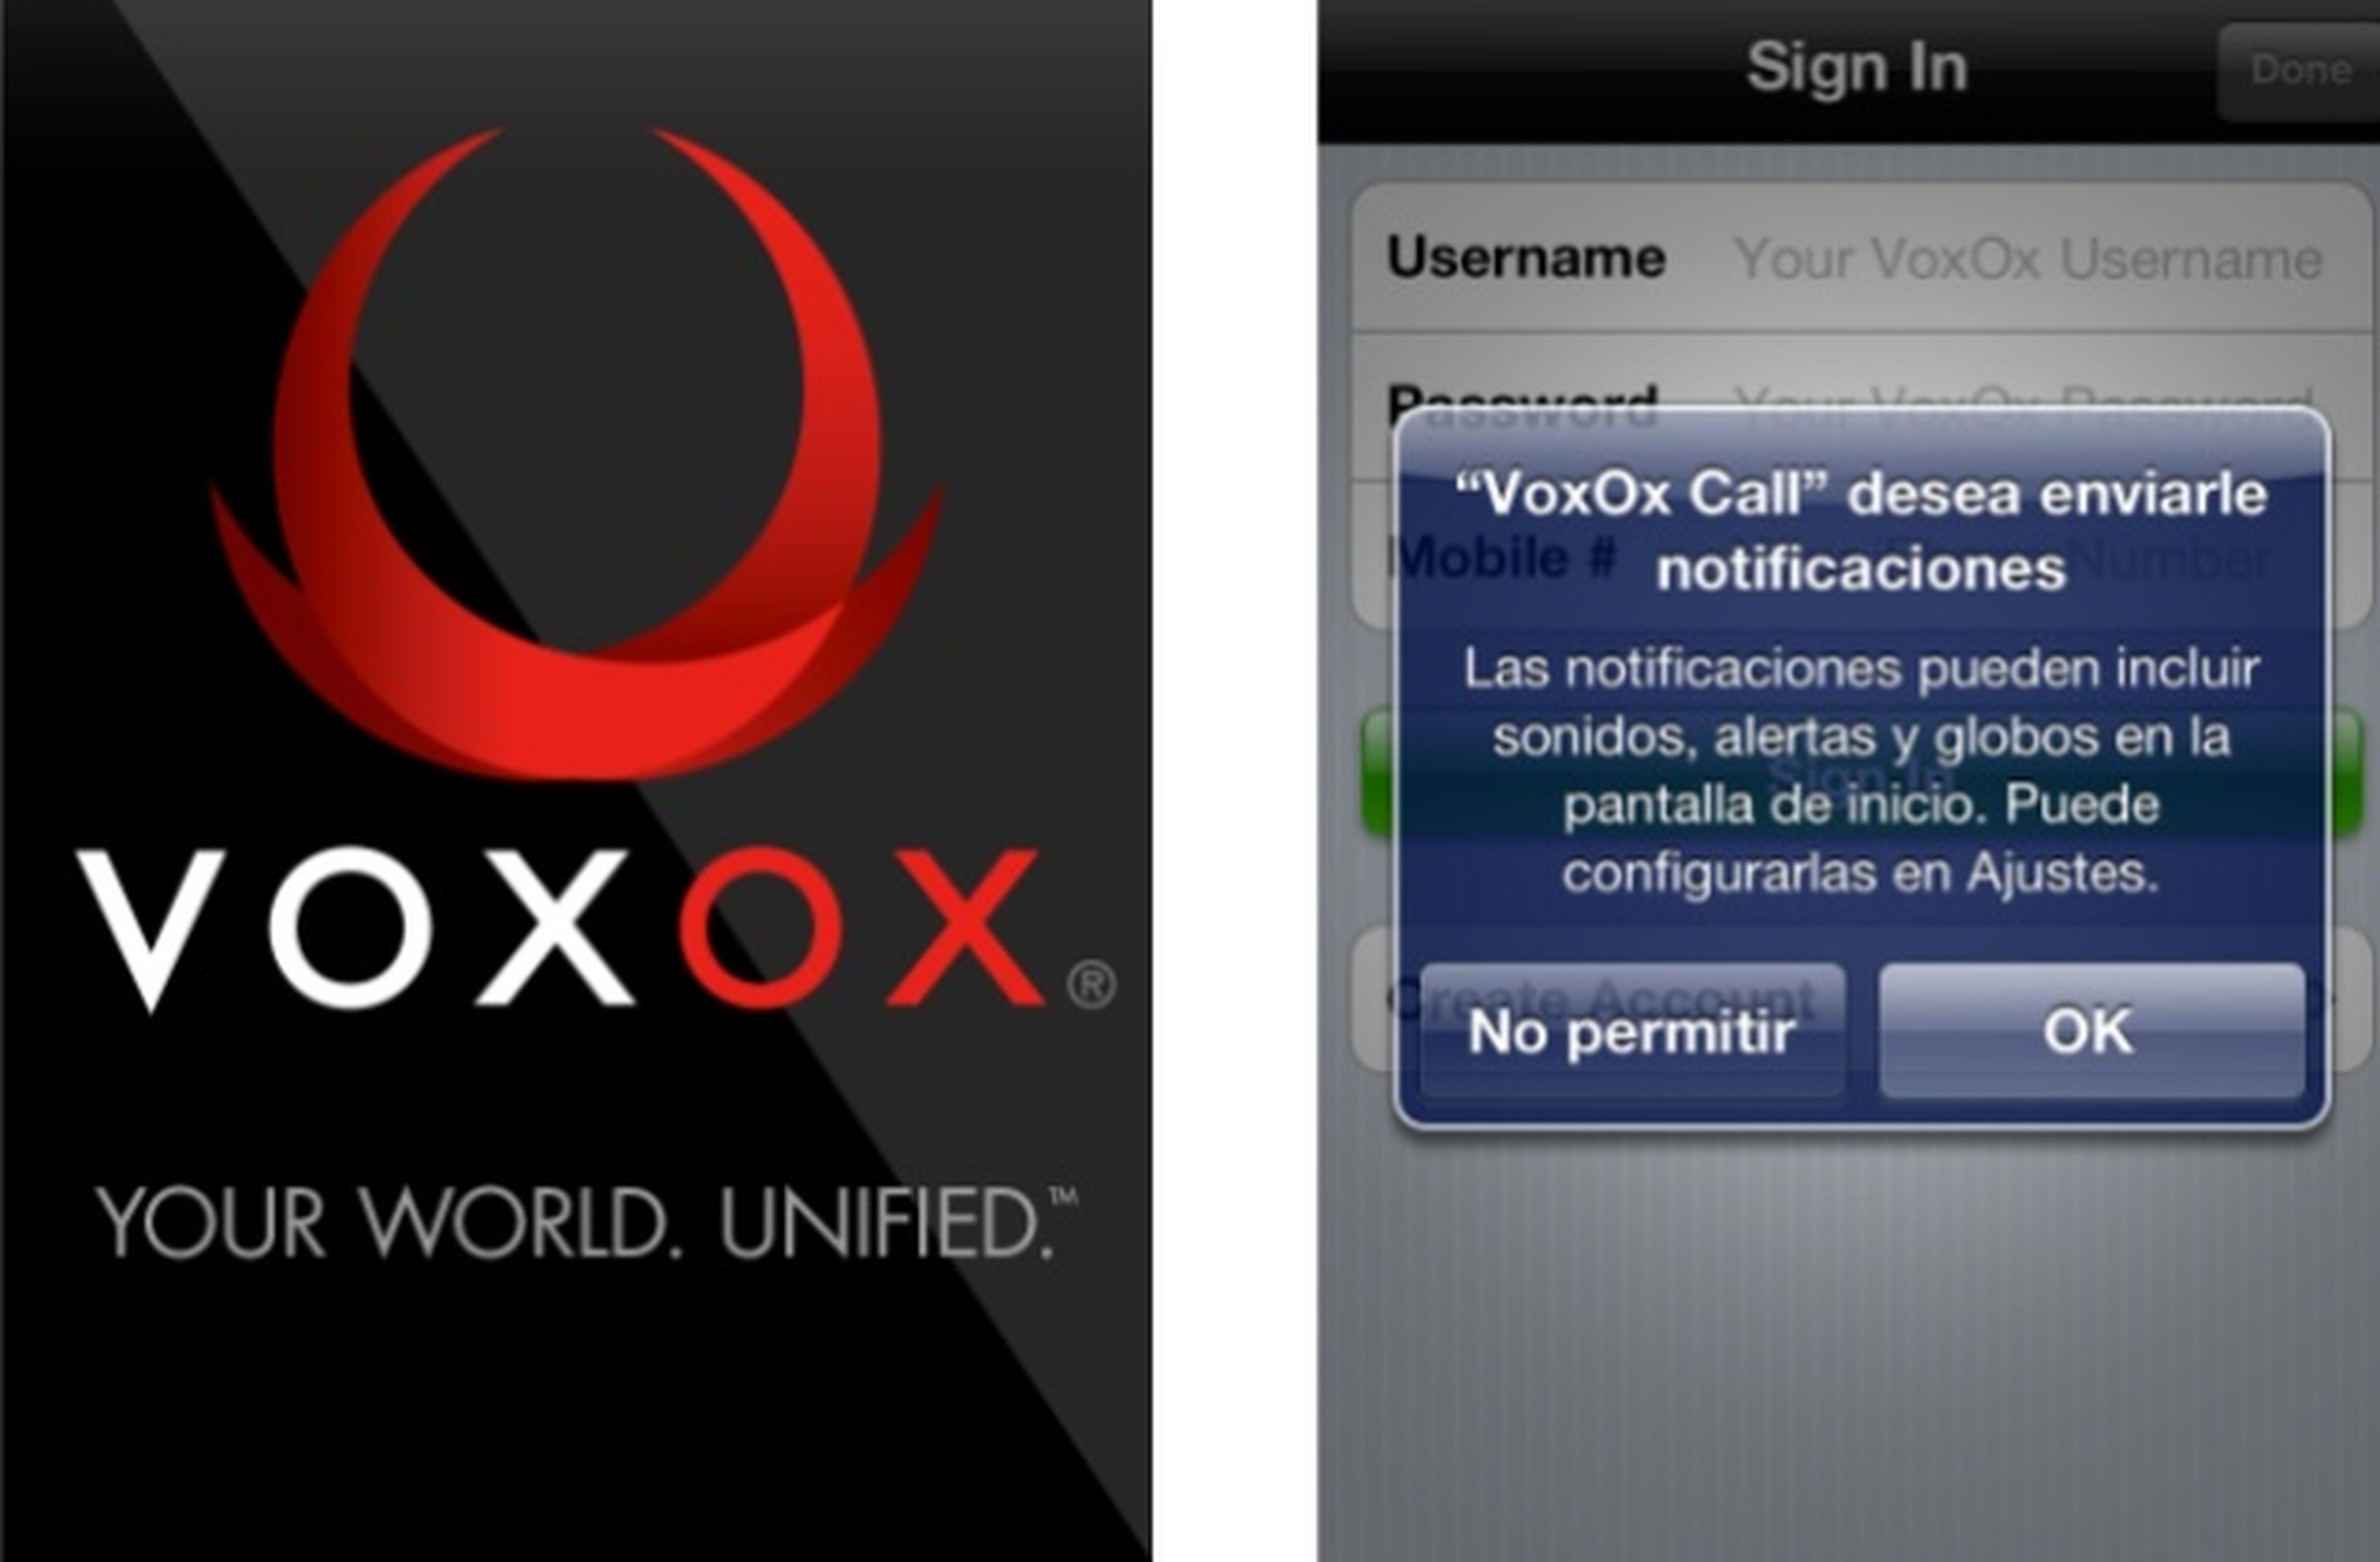 VoxOx Call